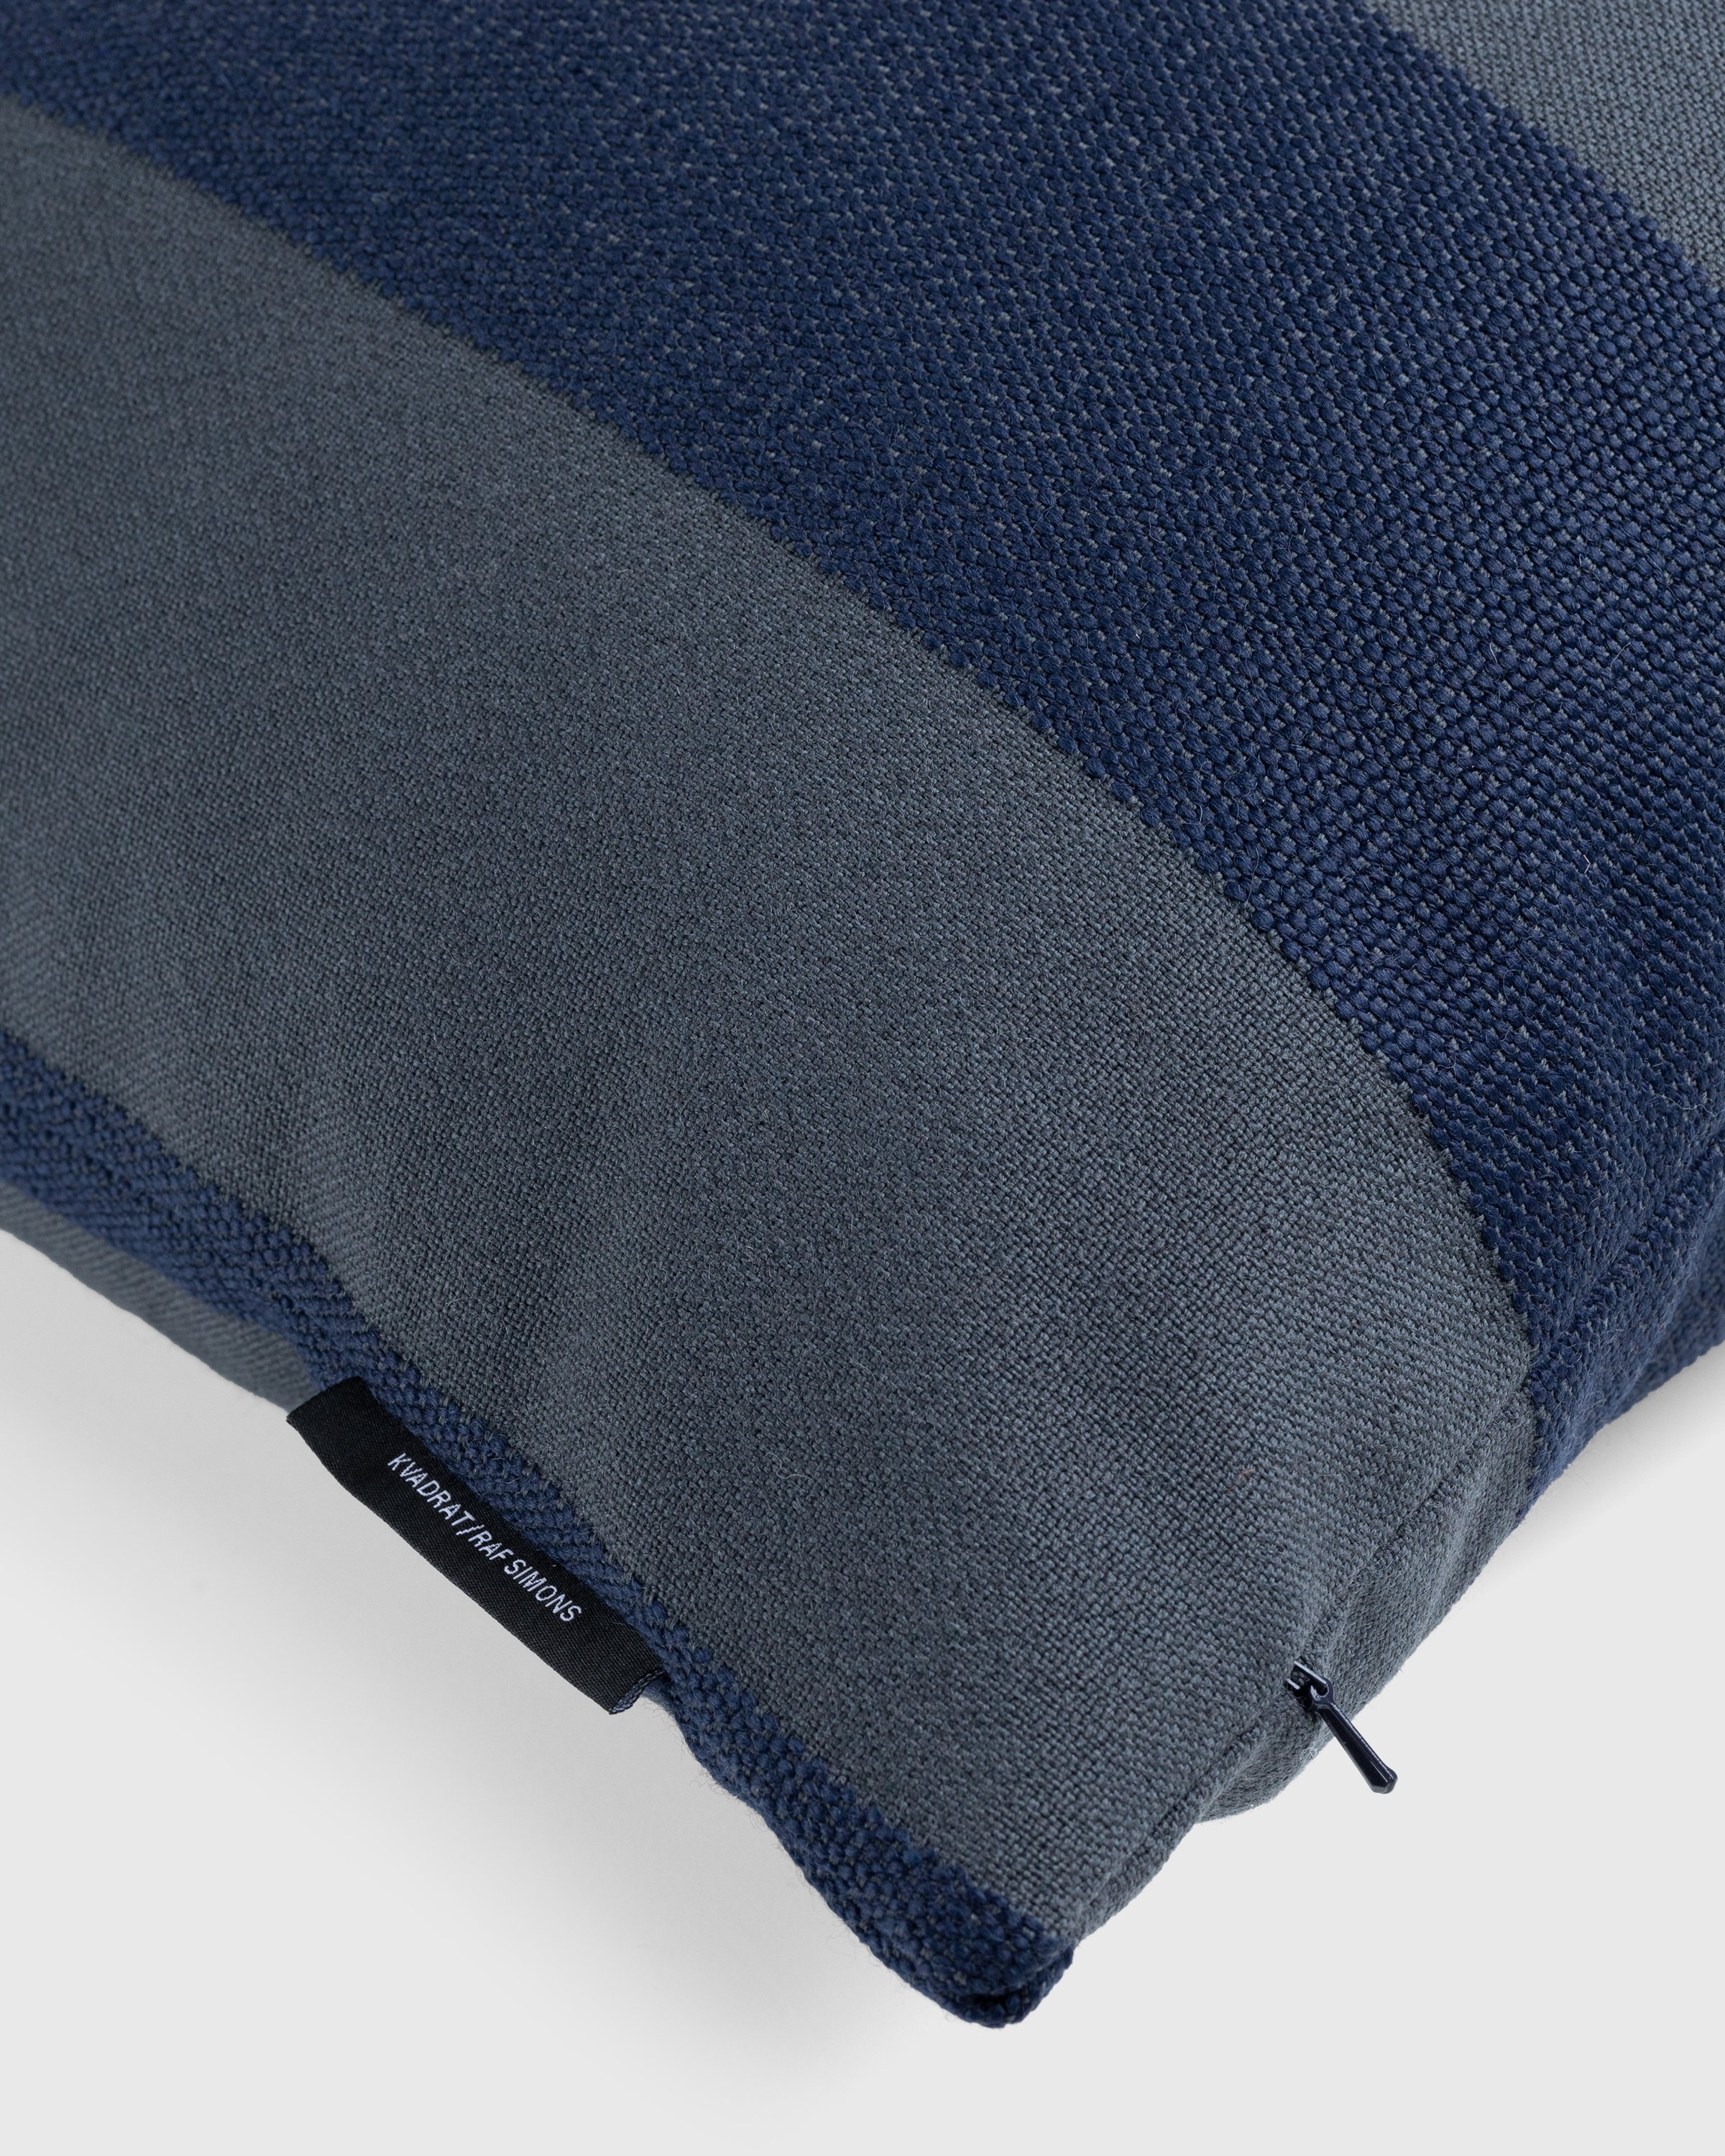 Kvadrat/Raf Simons - Reflex Pillow Grey/Blue - Lifestyle - Blue - Image 2